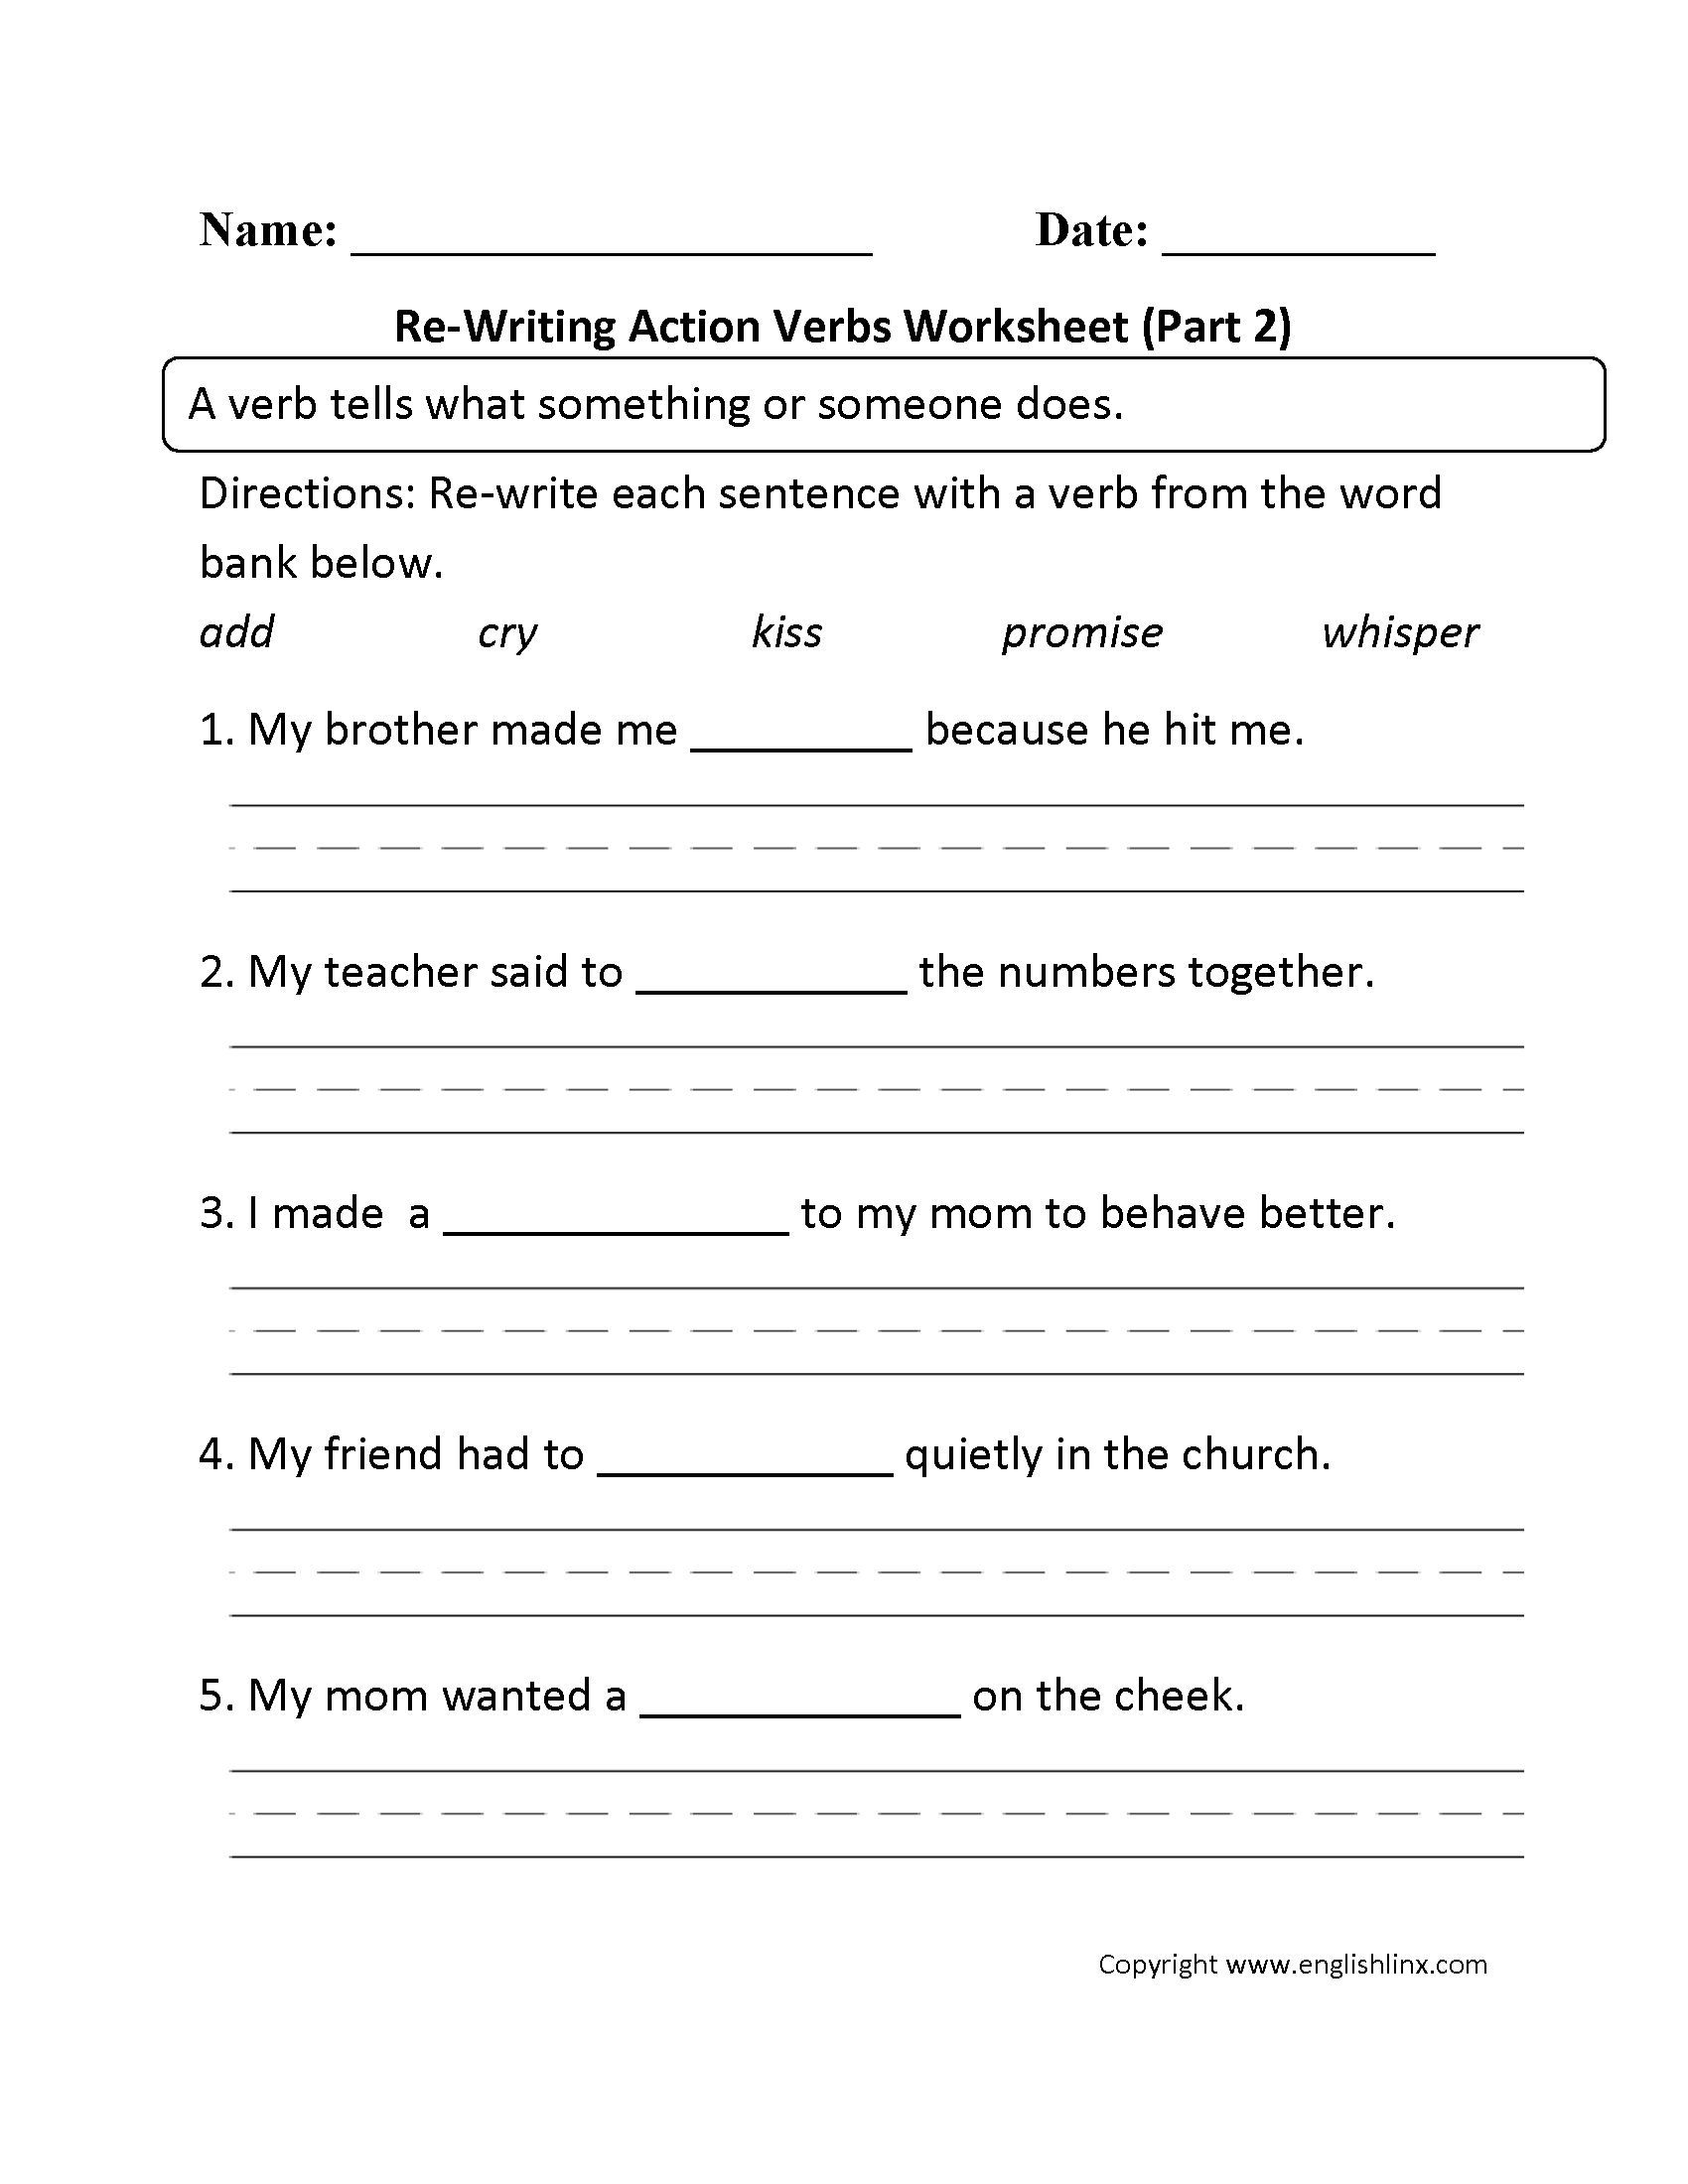 action-verb-linking-verb-worksheet